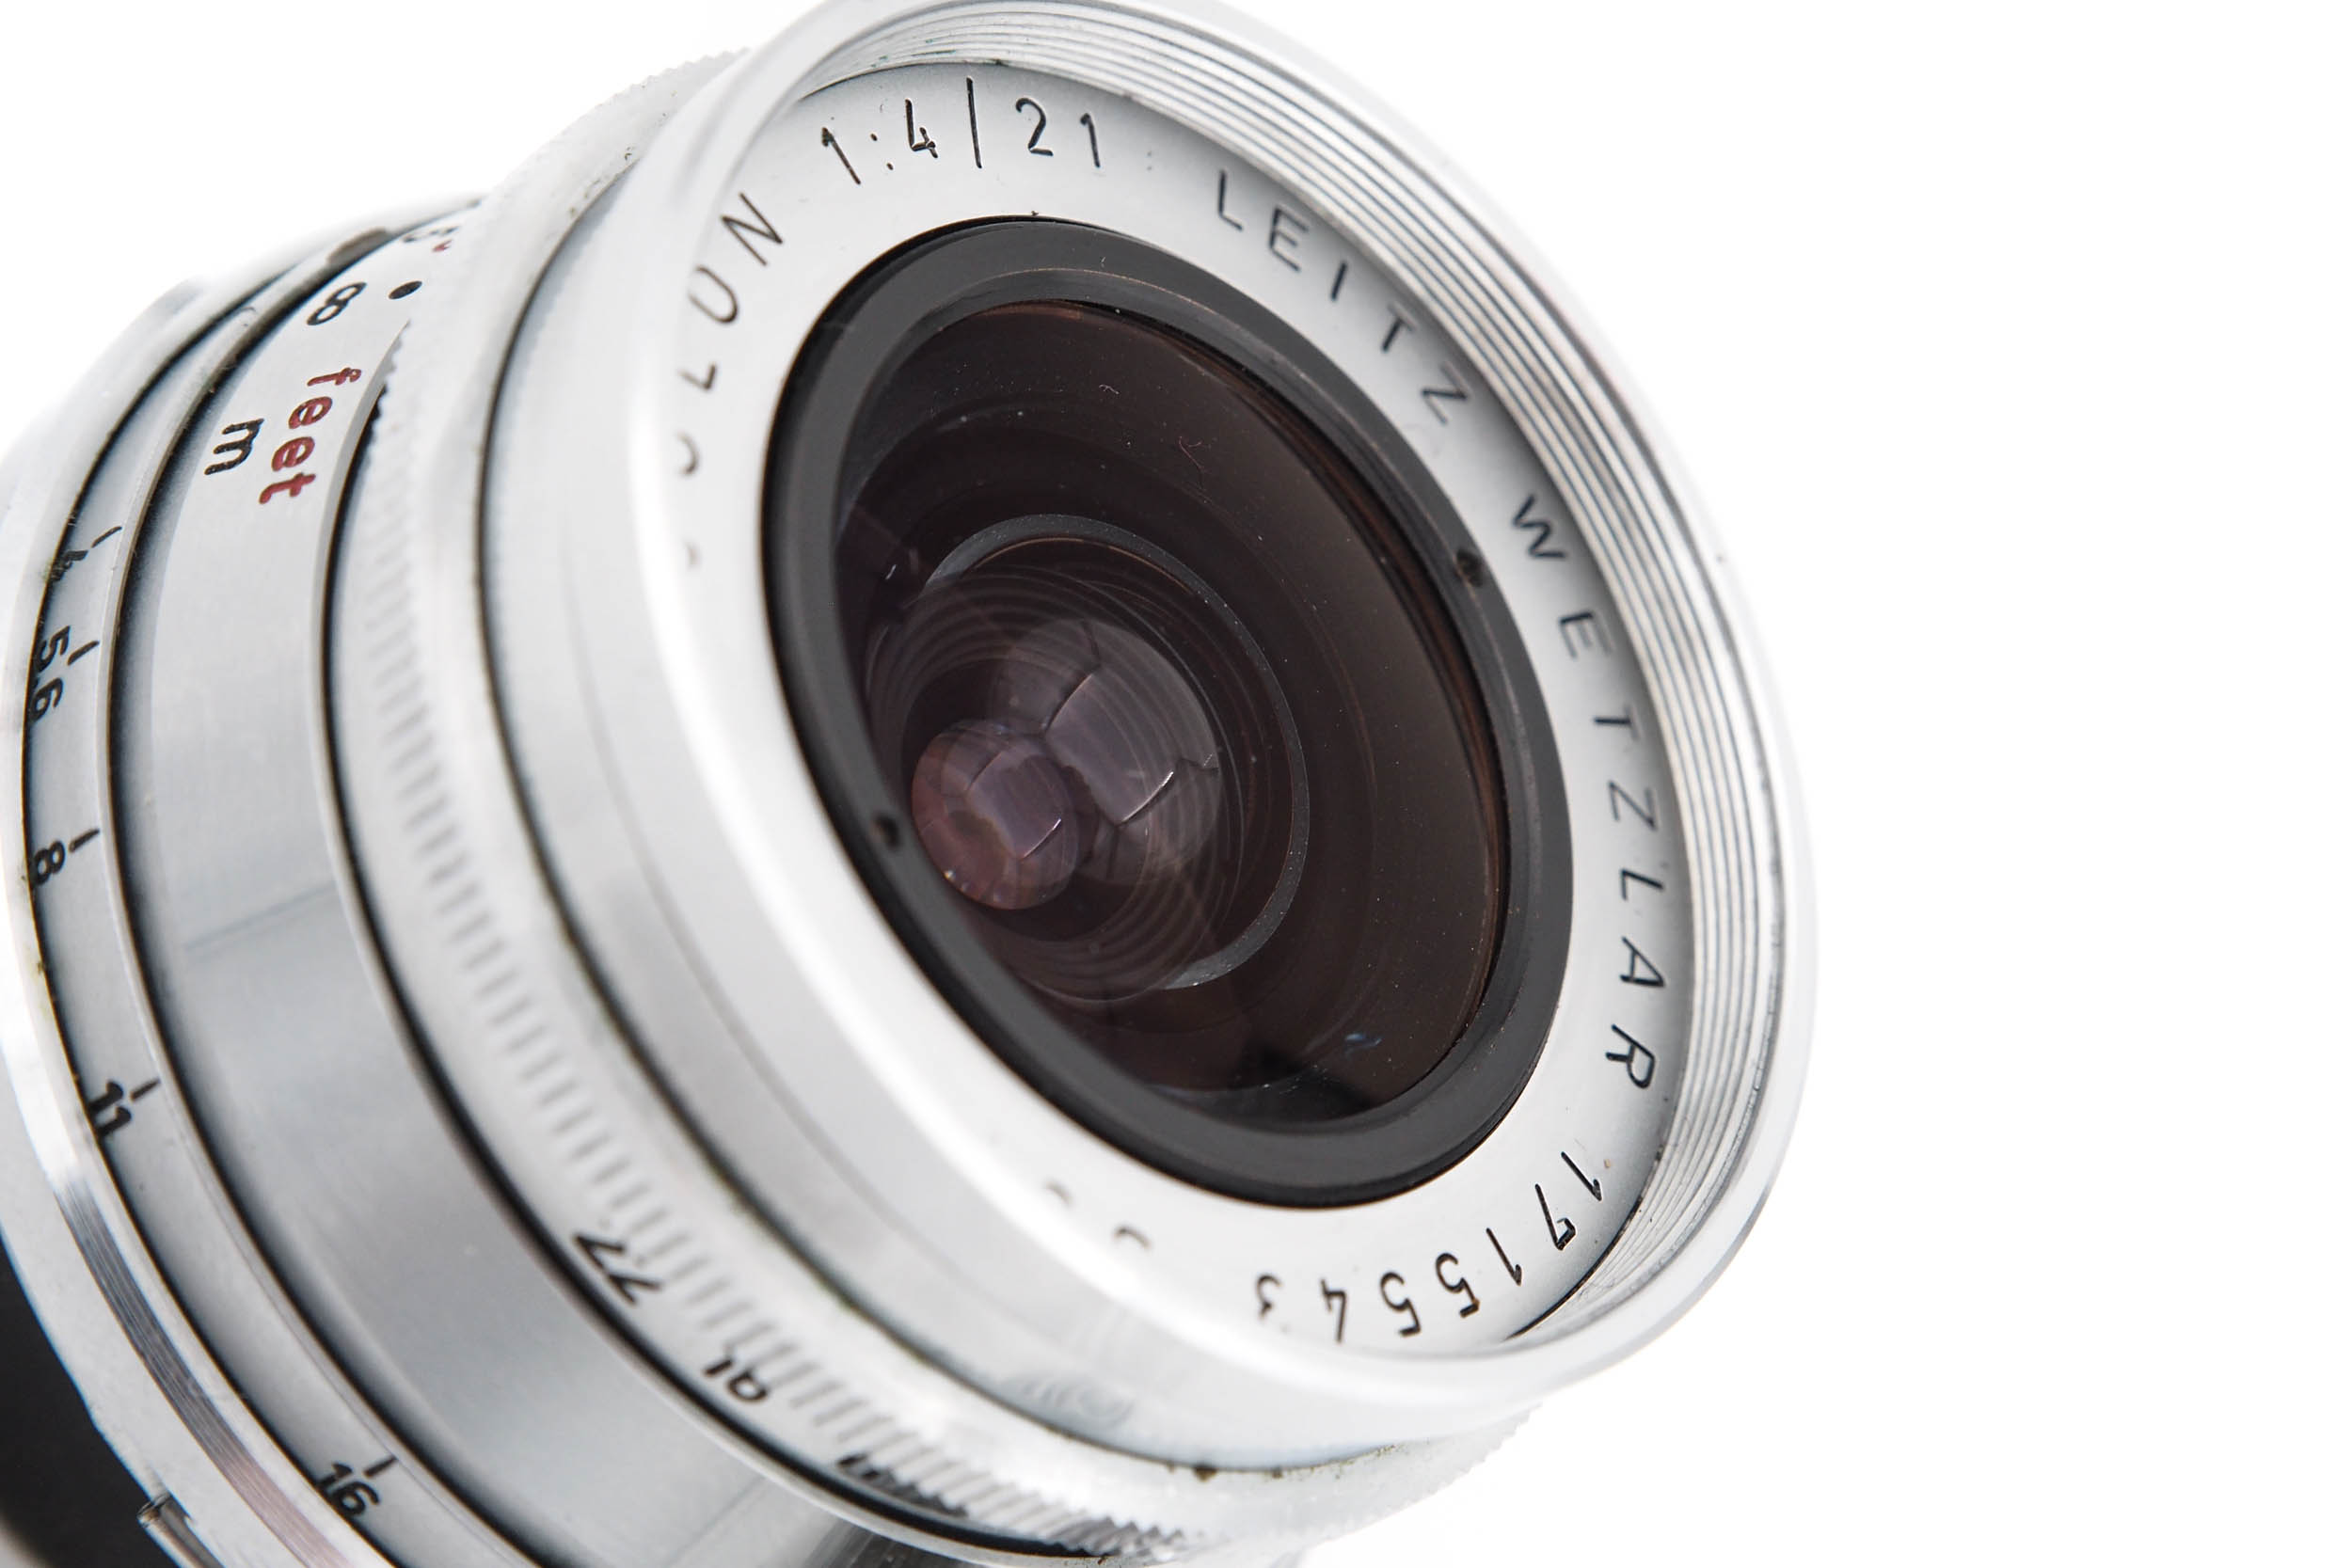 Leica 21mm f/4 Super-Angulon 